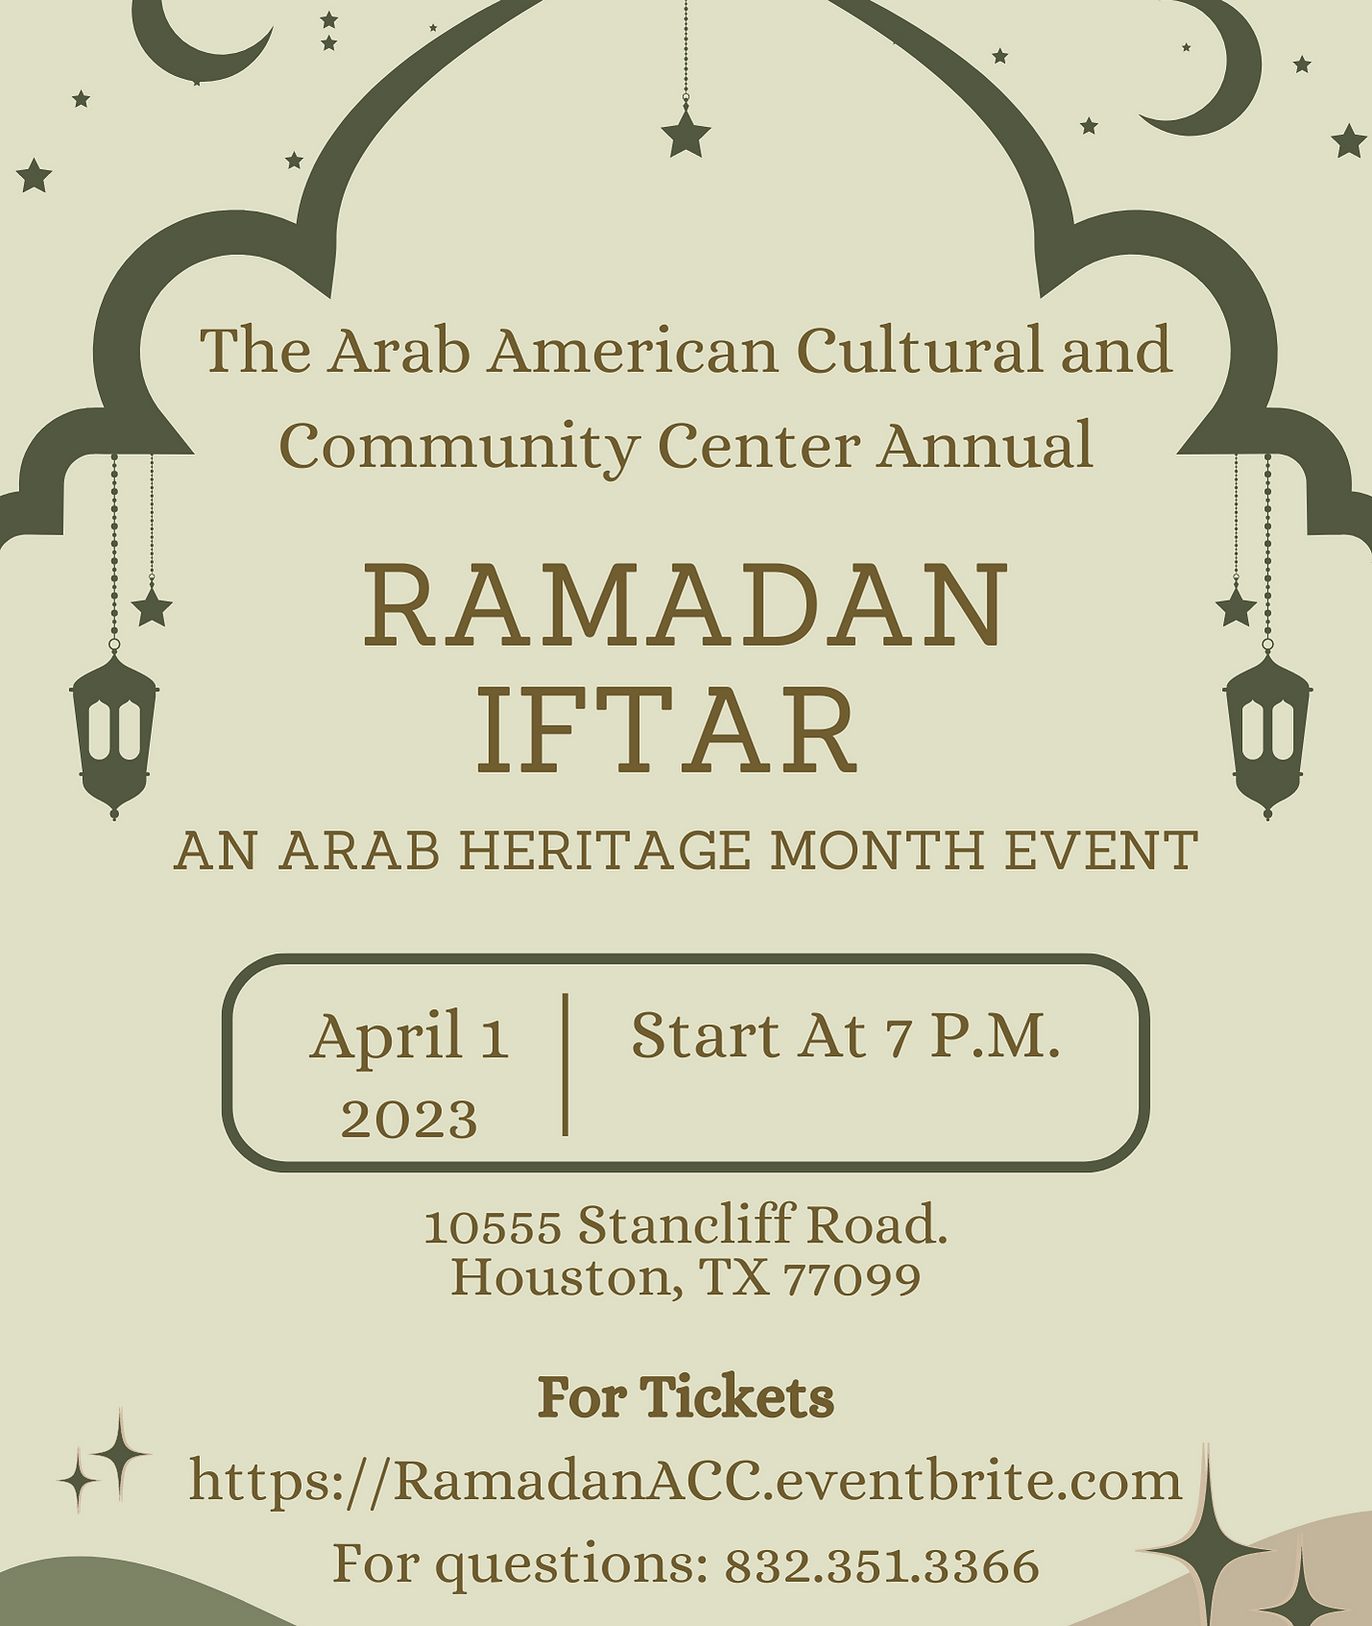 ACC Community Center Annual Ramadan Iftar: A Arab Heritage Month Event